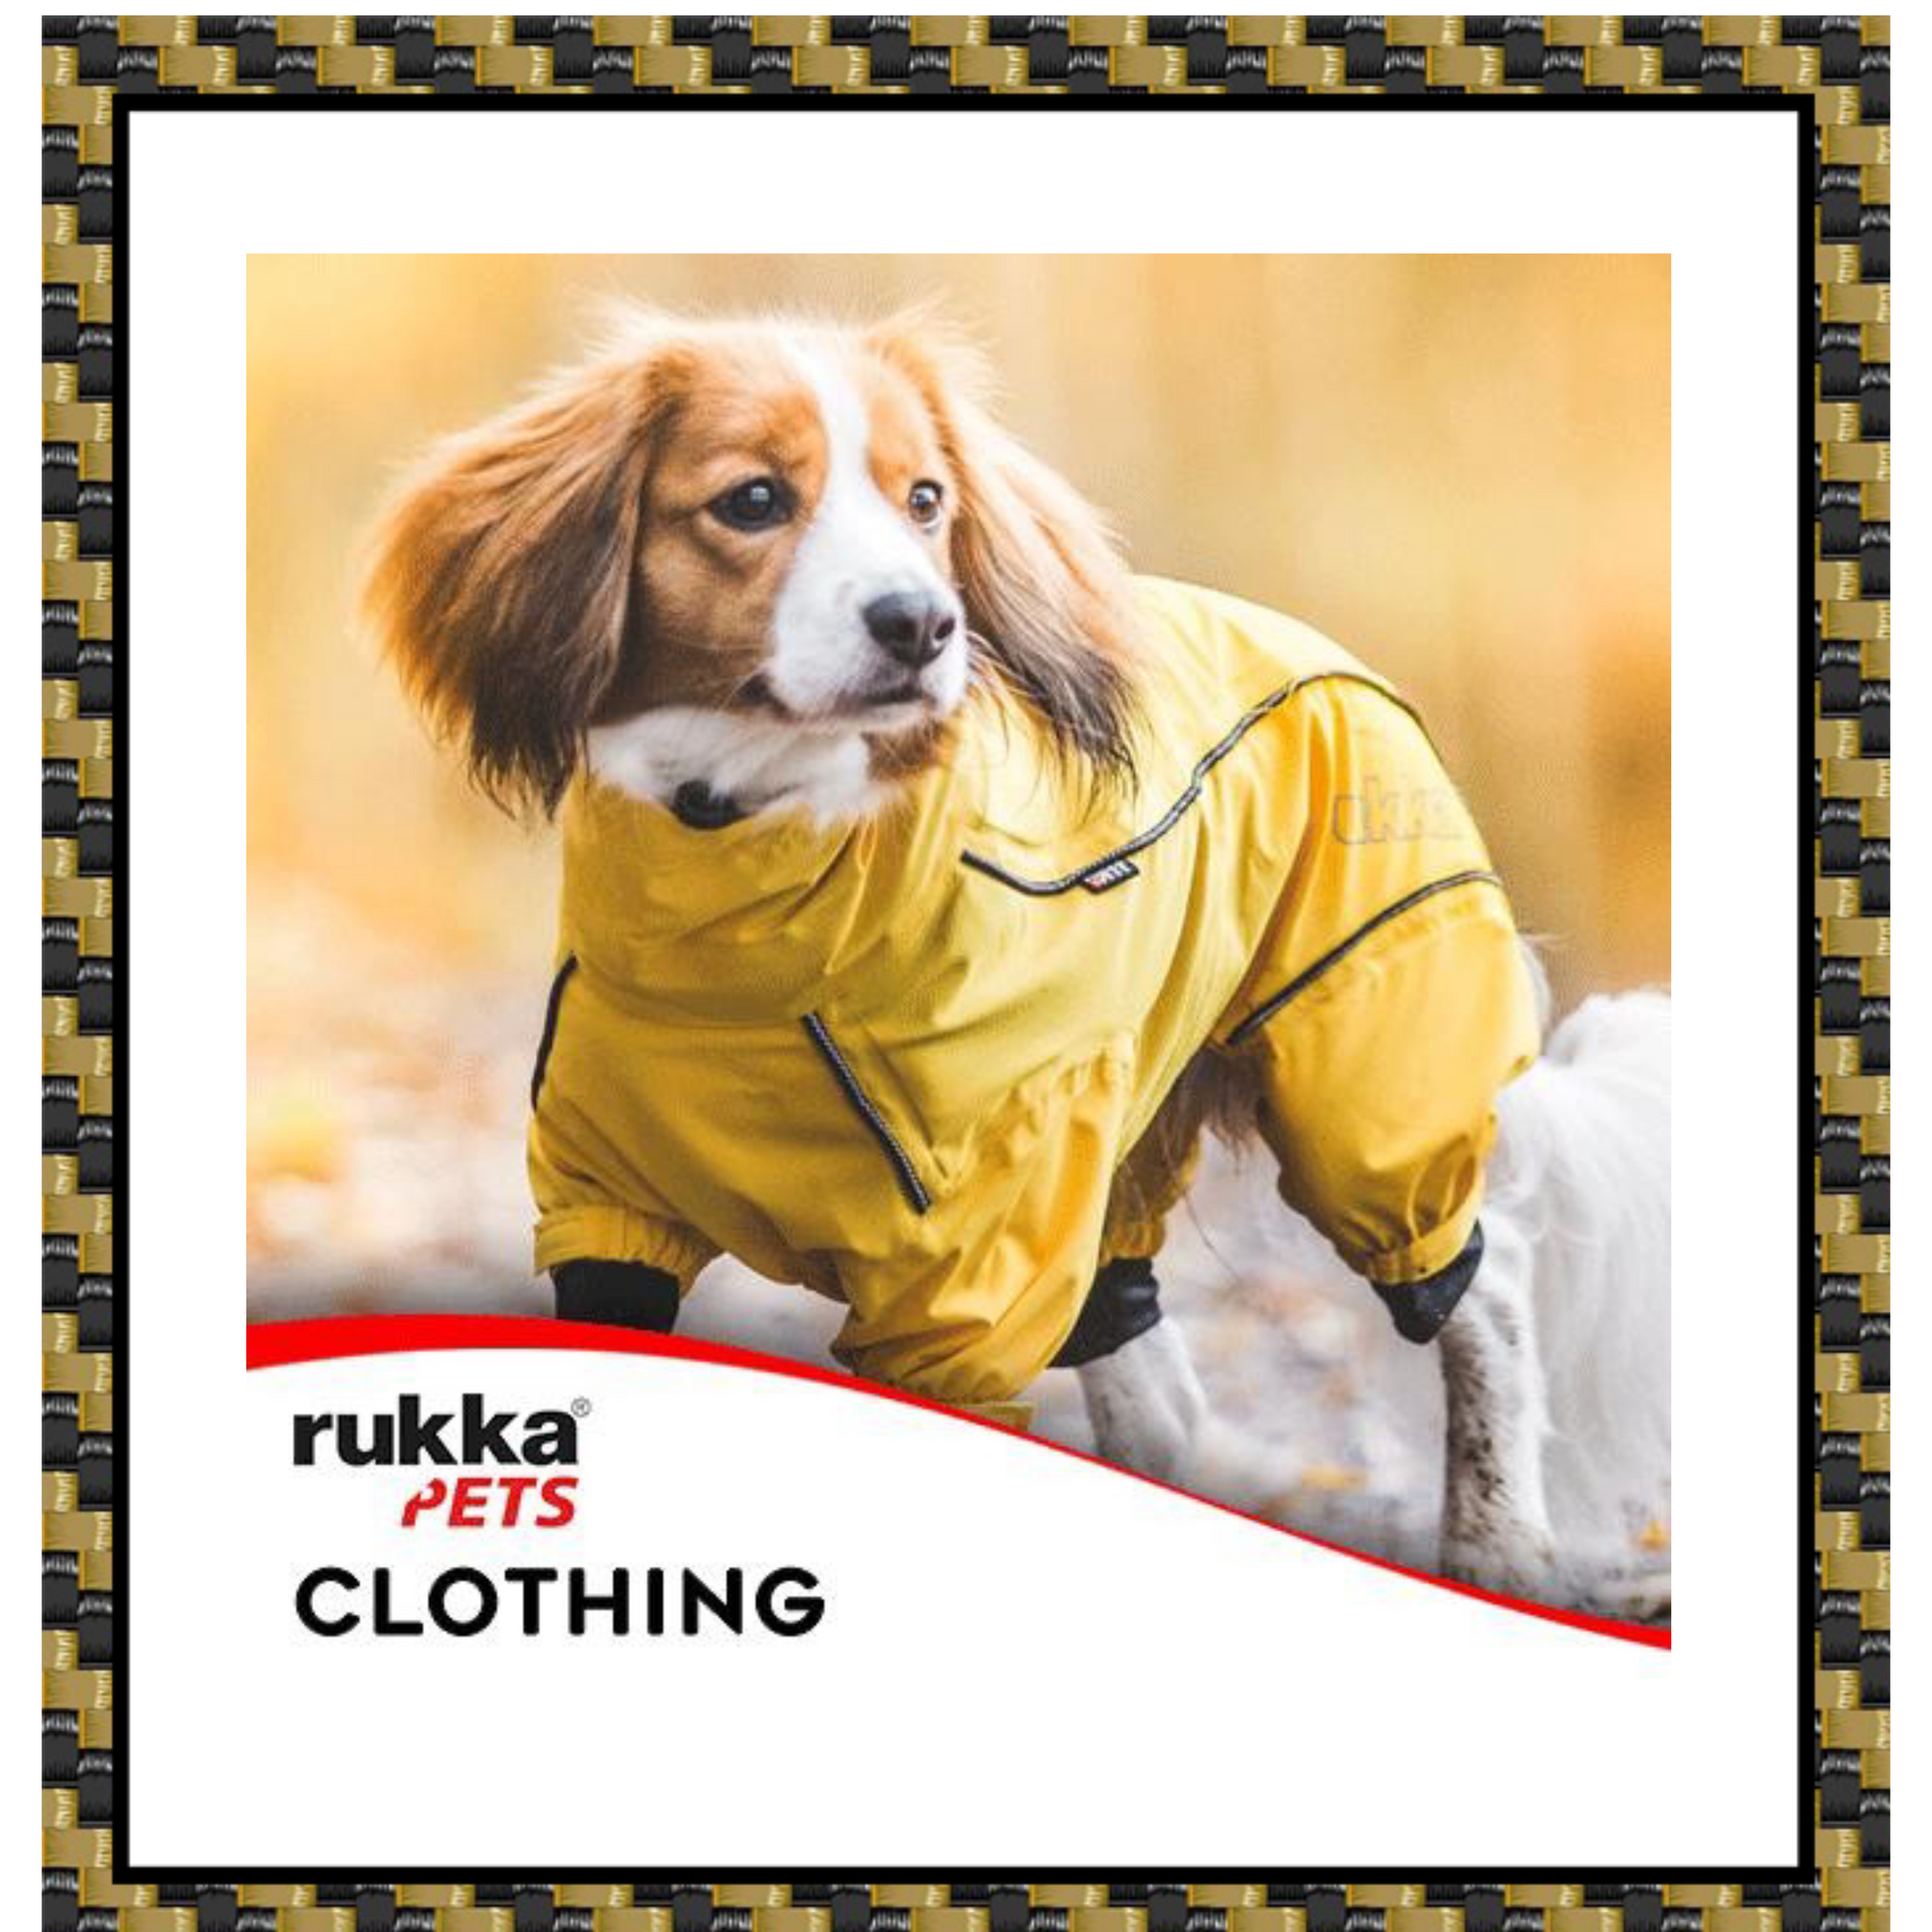 Rukka Pets Clothing